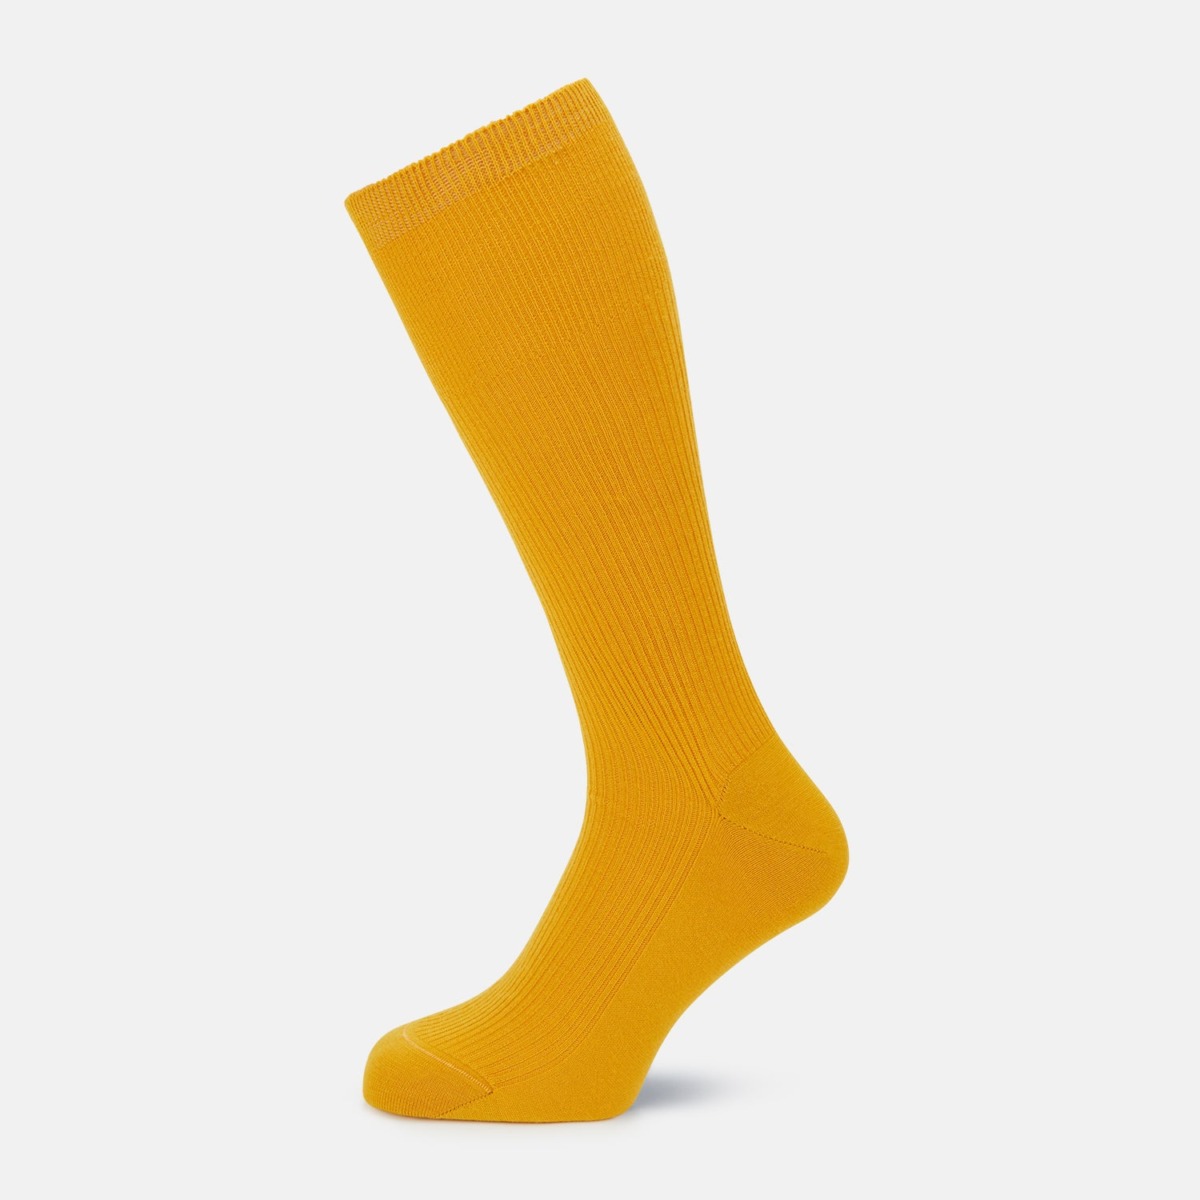 Turnbull And Asser - Gents Socks in Yellow Turnbull & Asser GOOFASH